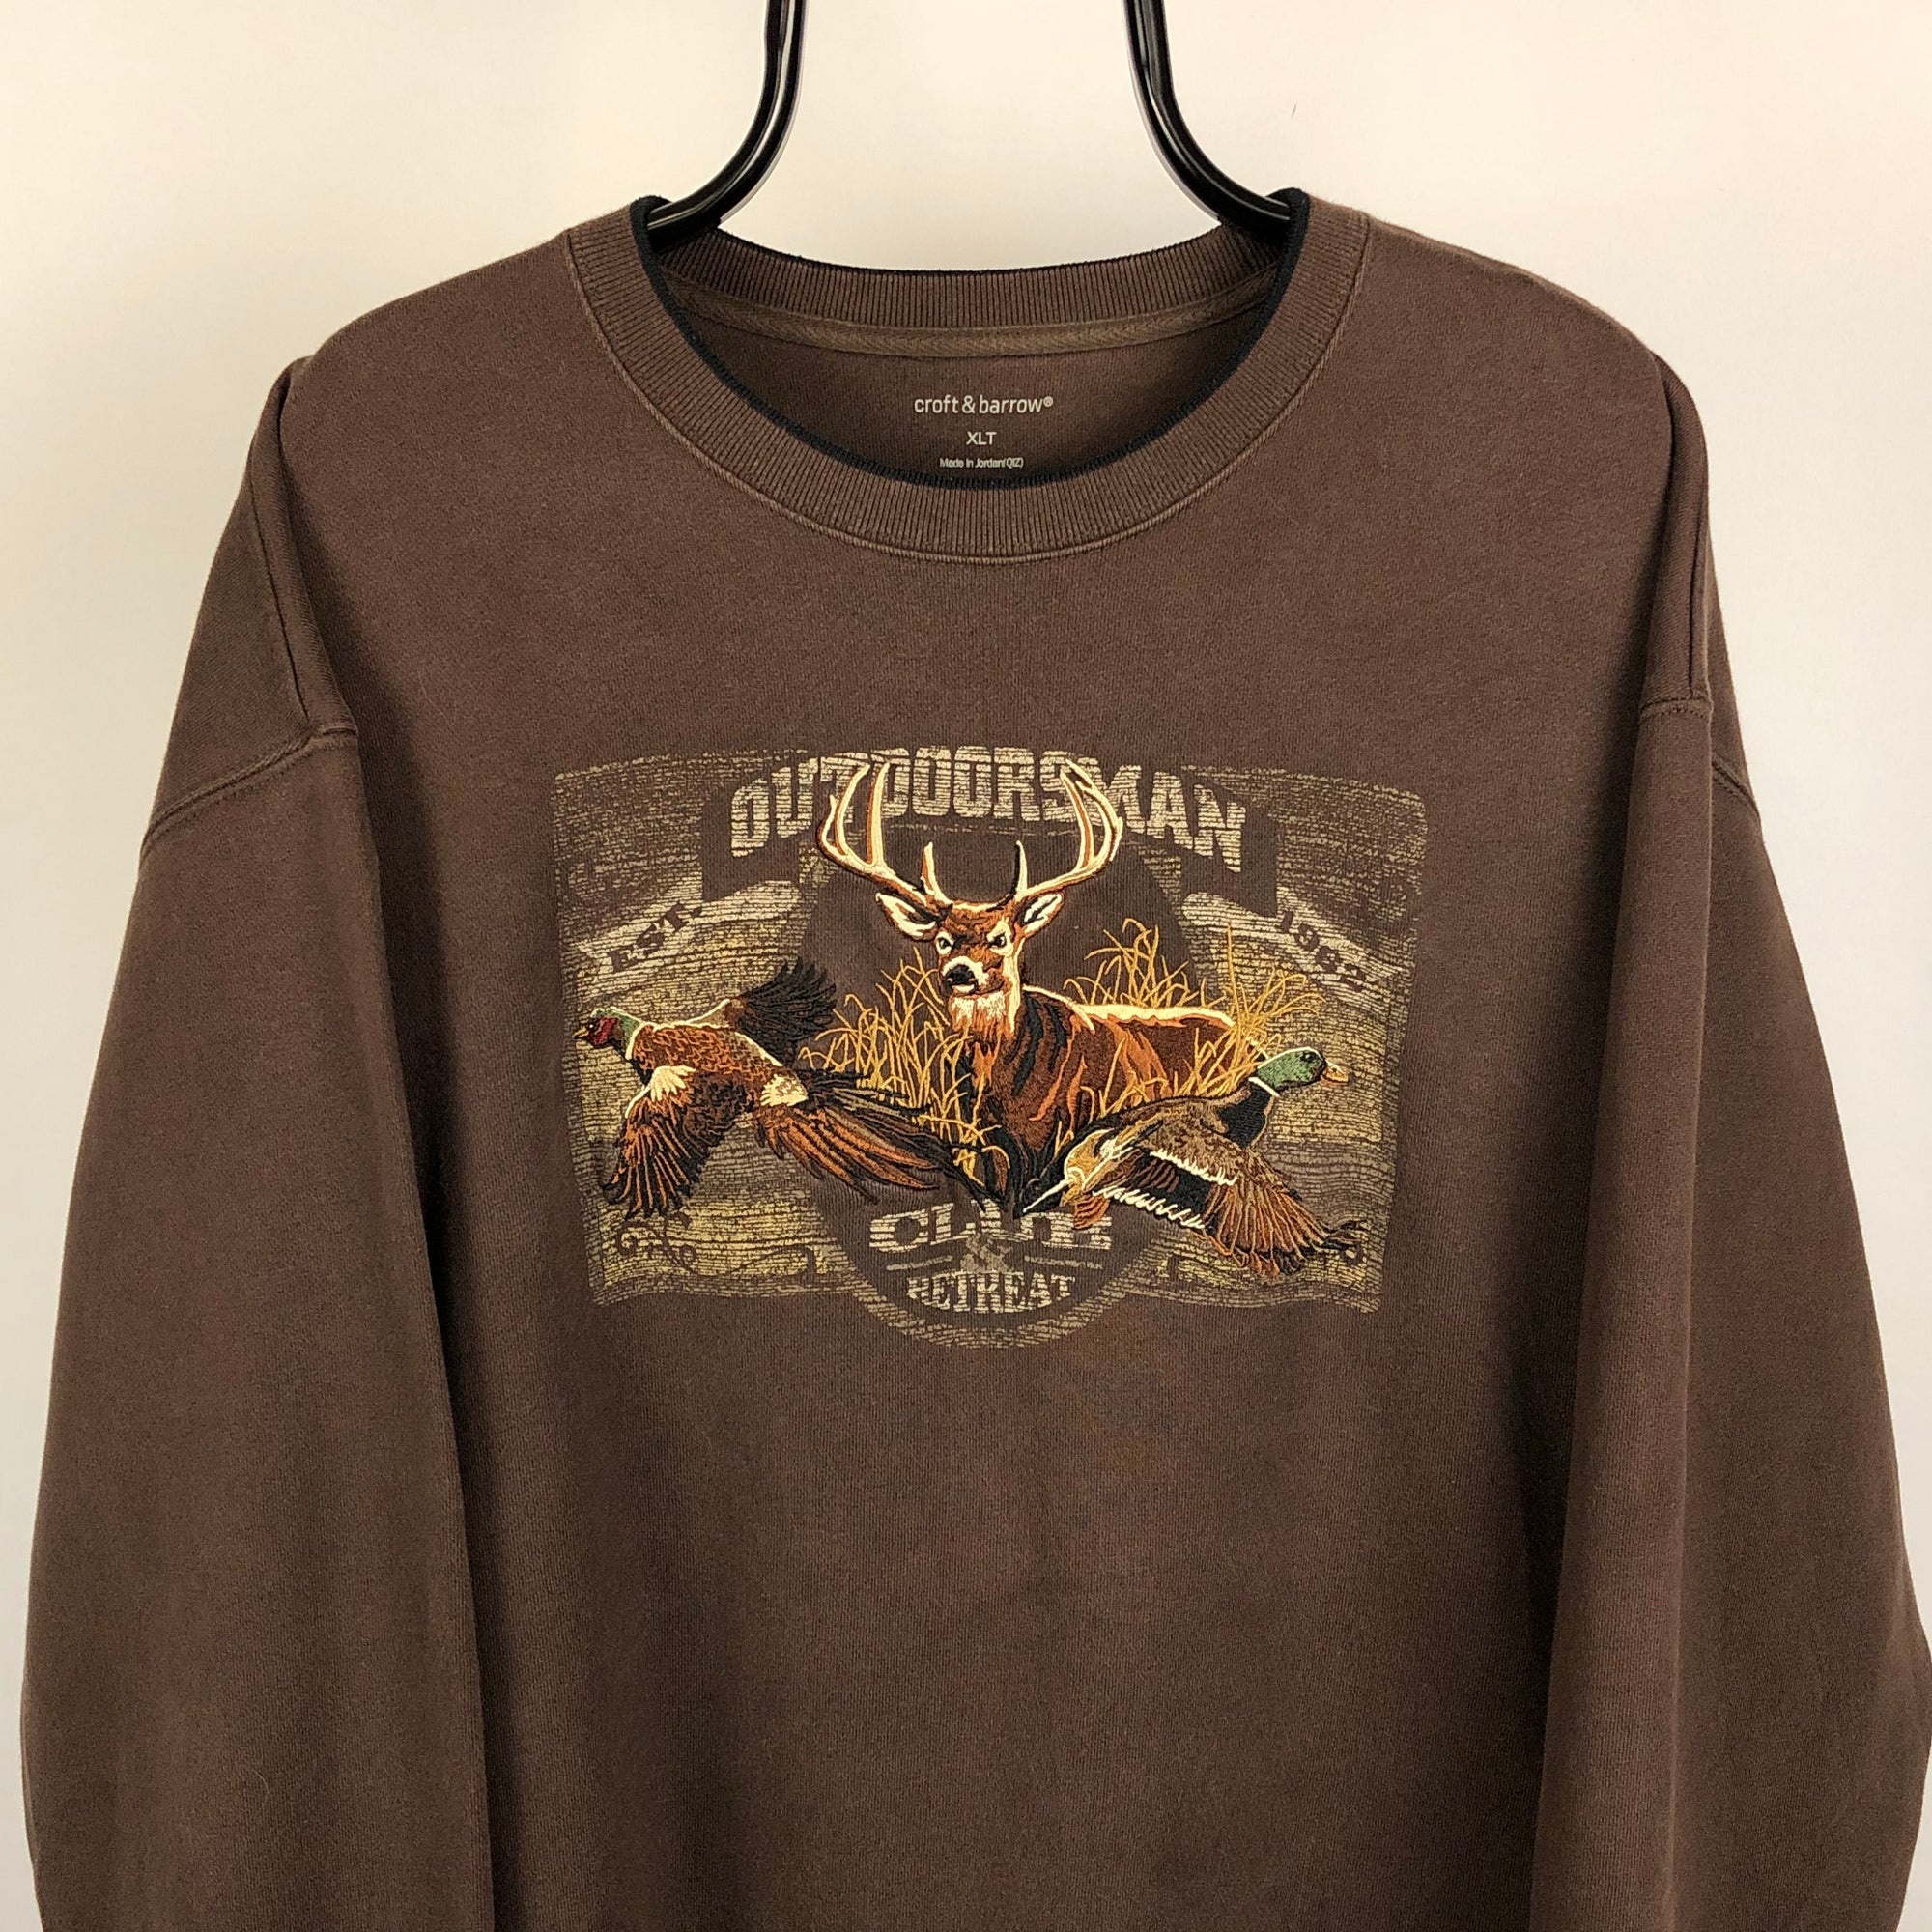 Vintage Outdoorsman Heavyweight Sweatshirt in Brown - Men's XL/Women's XXL